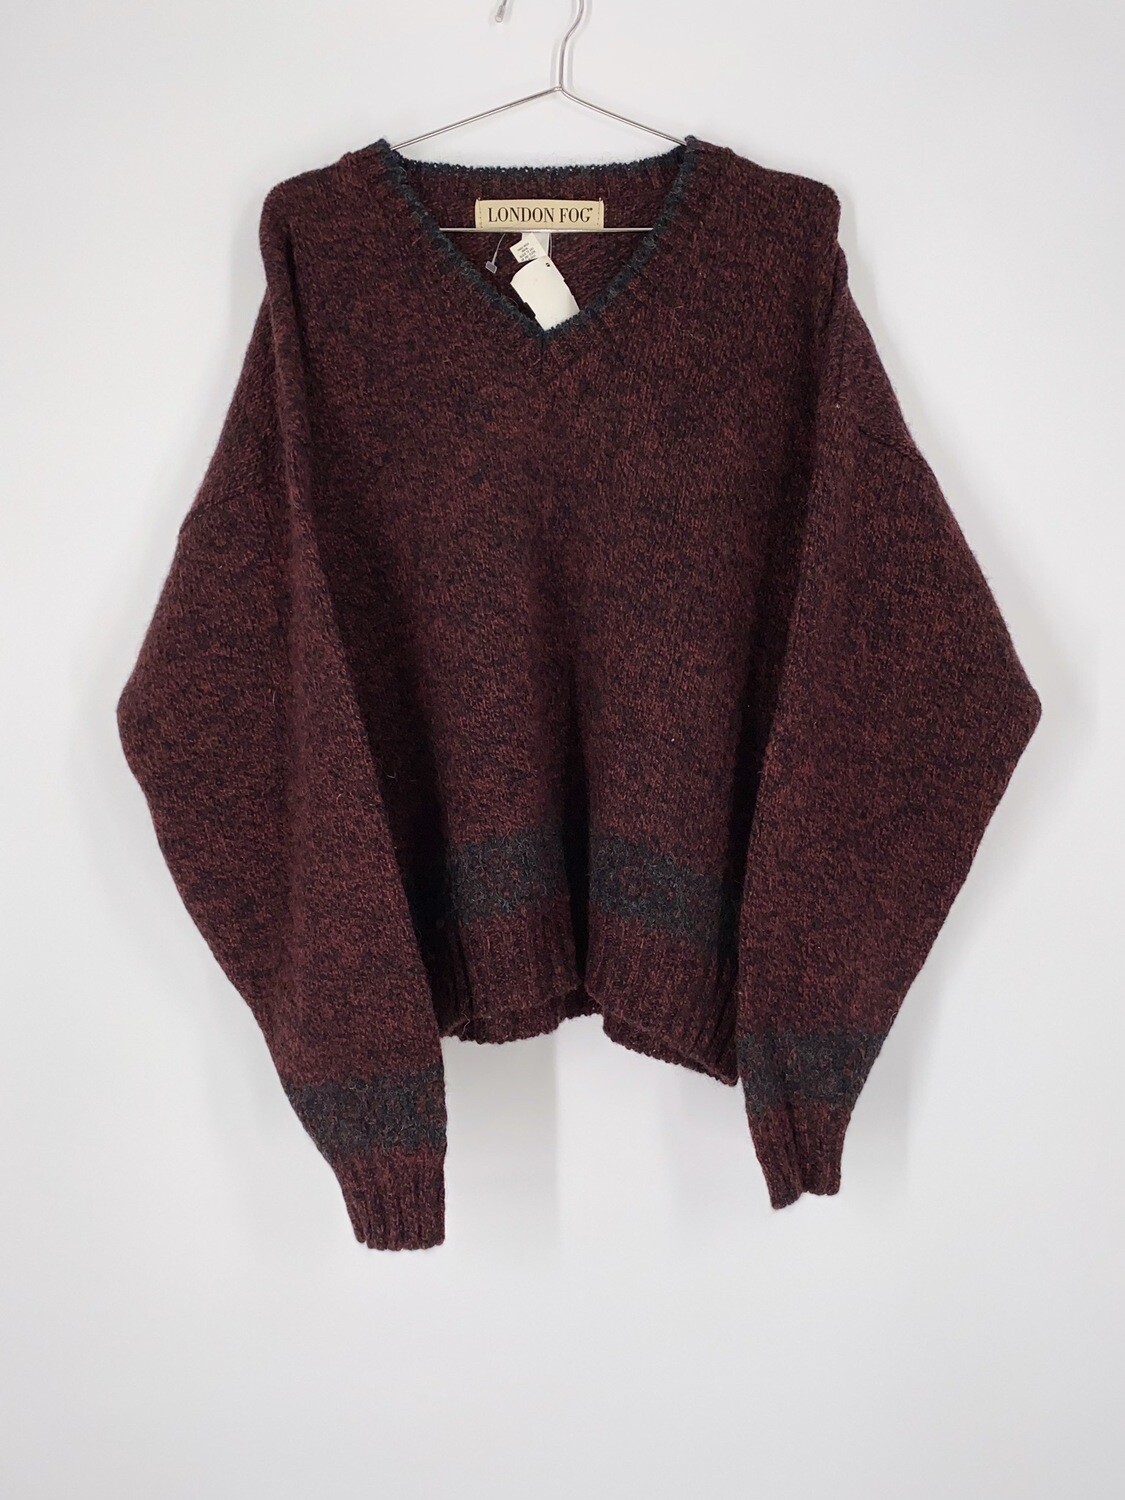 London Fog V-Neck Sweater Size L